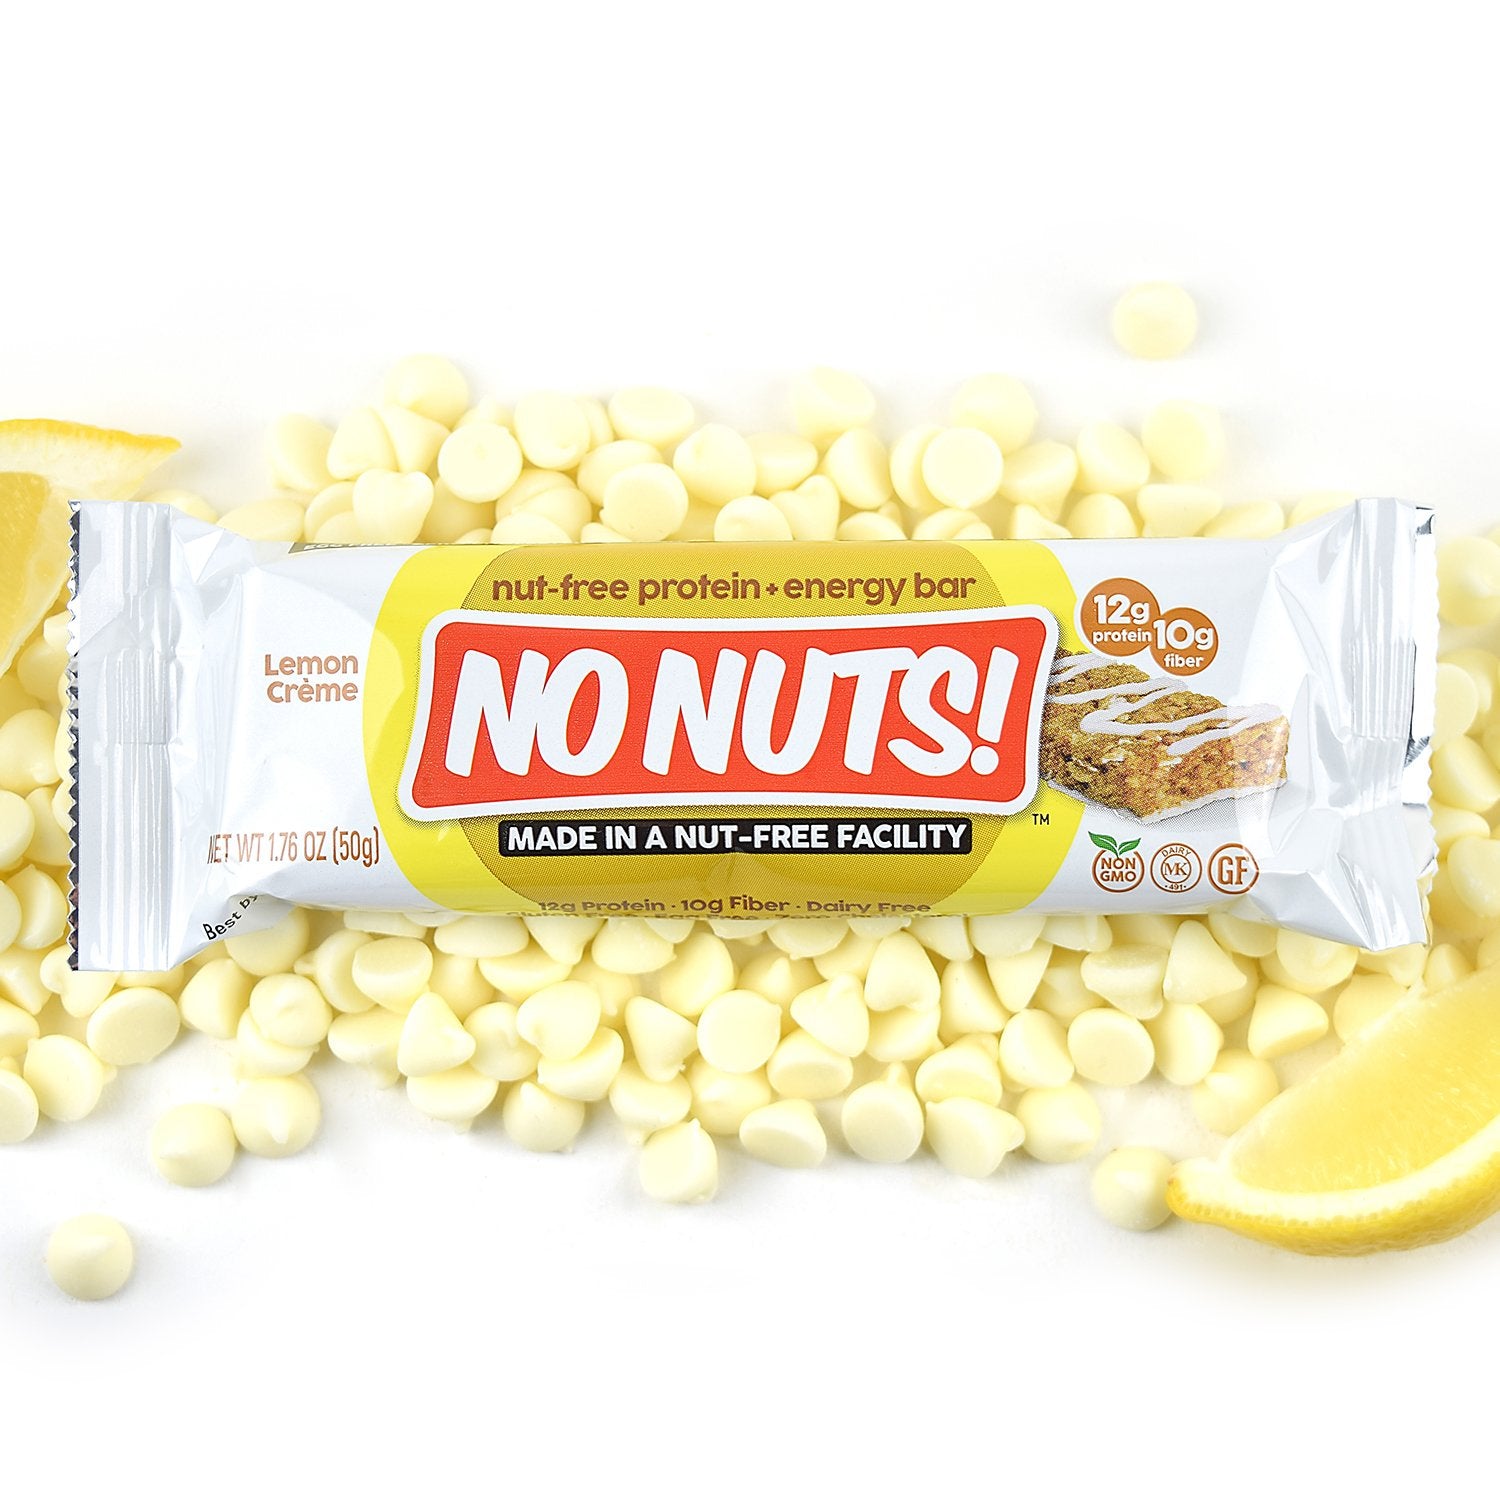 No Nuts! Lemon Creme Protein Bars